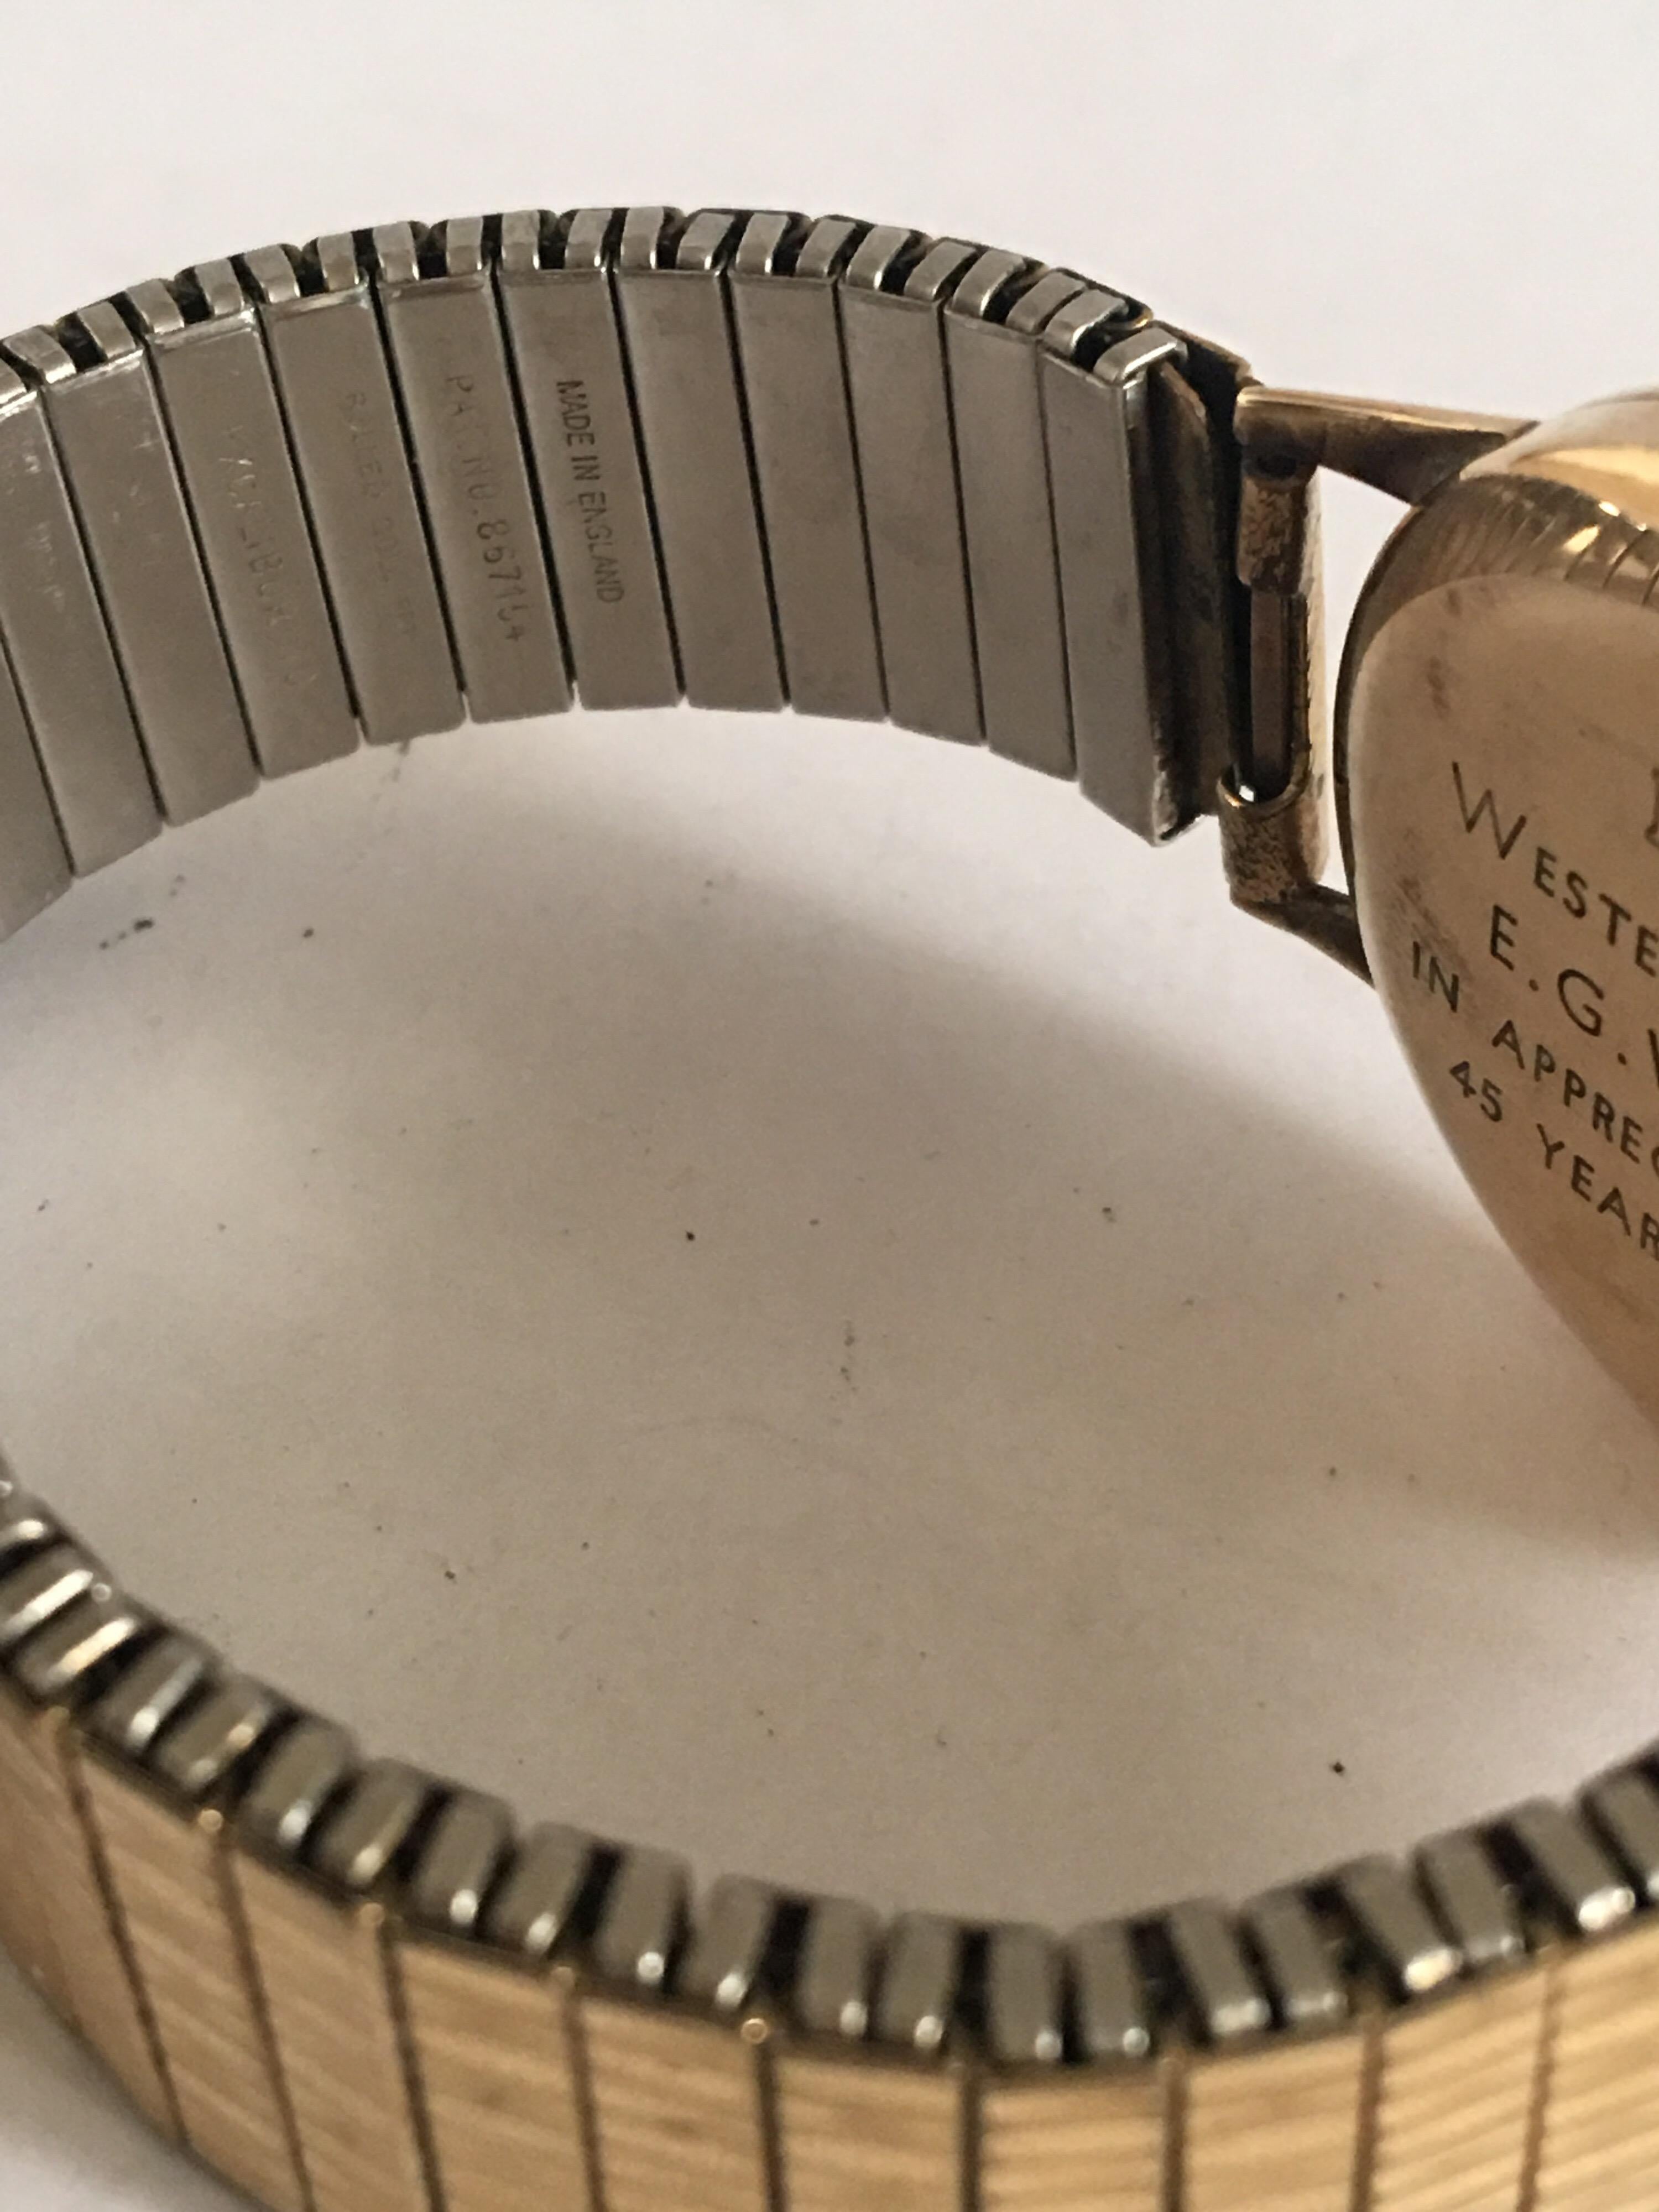 9 Karat Gold Vintage 1950s Tudor Rolex Mechanical Wristwatch For Sale 2